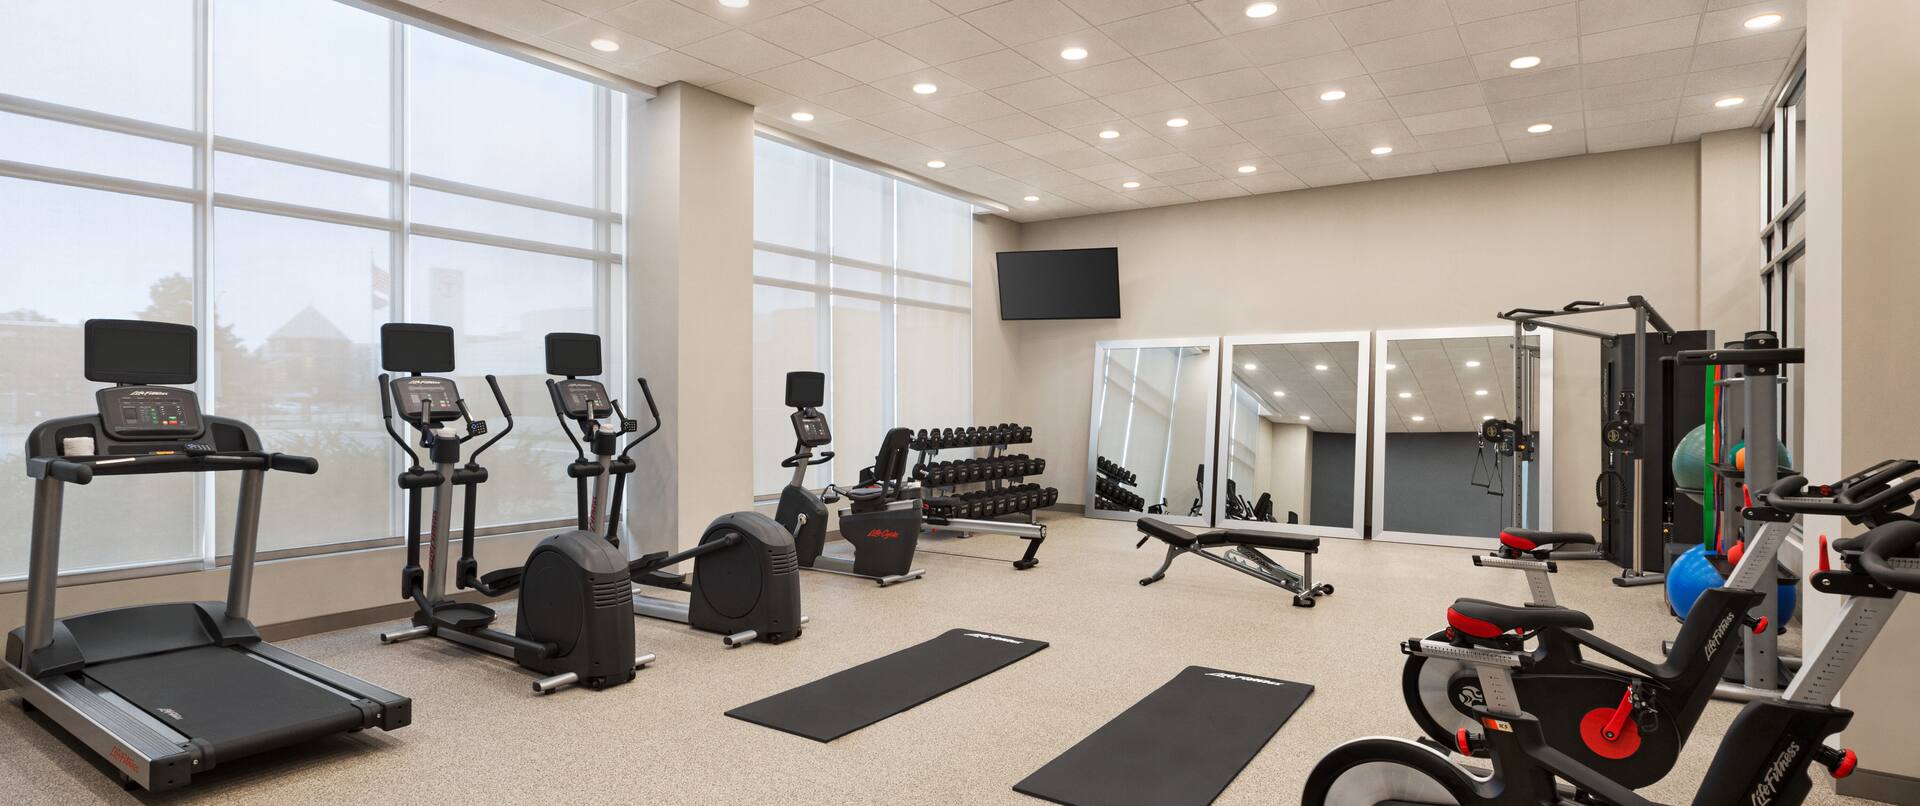 on-site fitness center, Peloton bikes, ellipticals, treadmill, free weights, weight bench